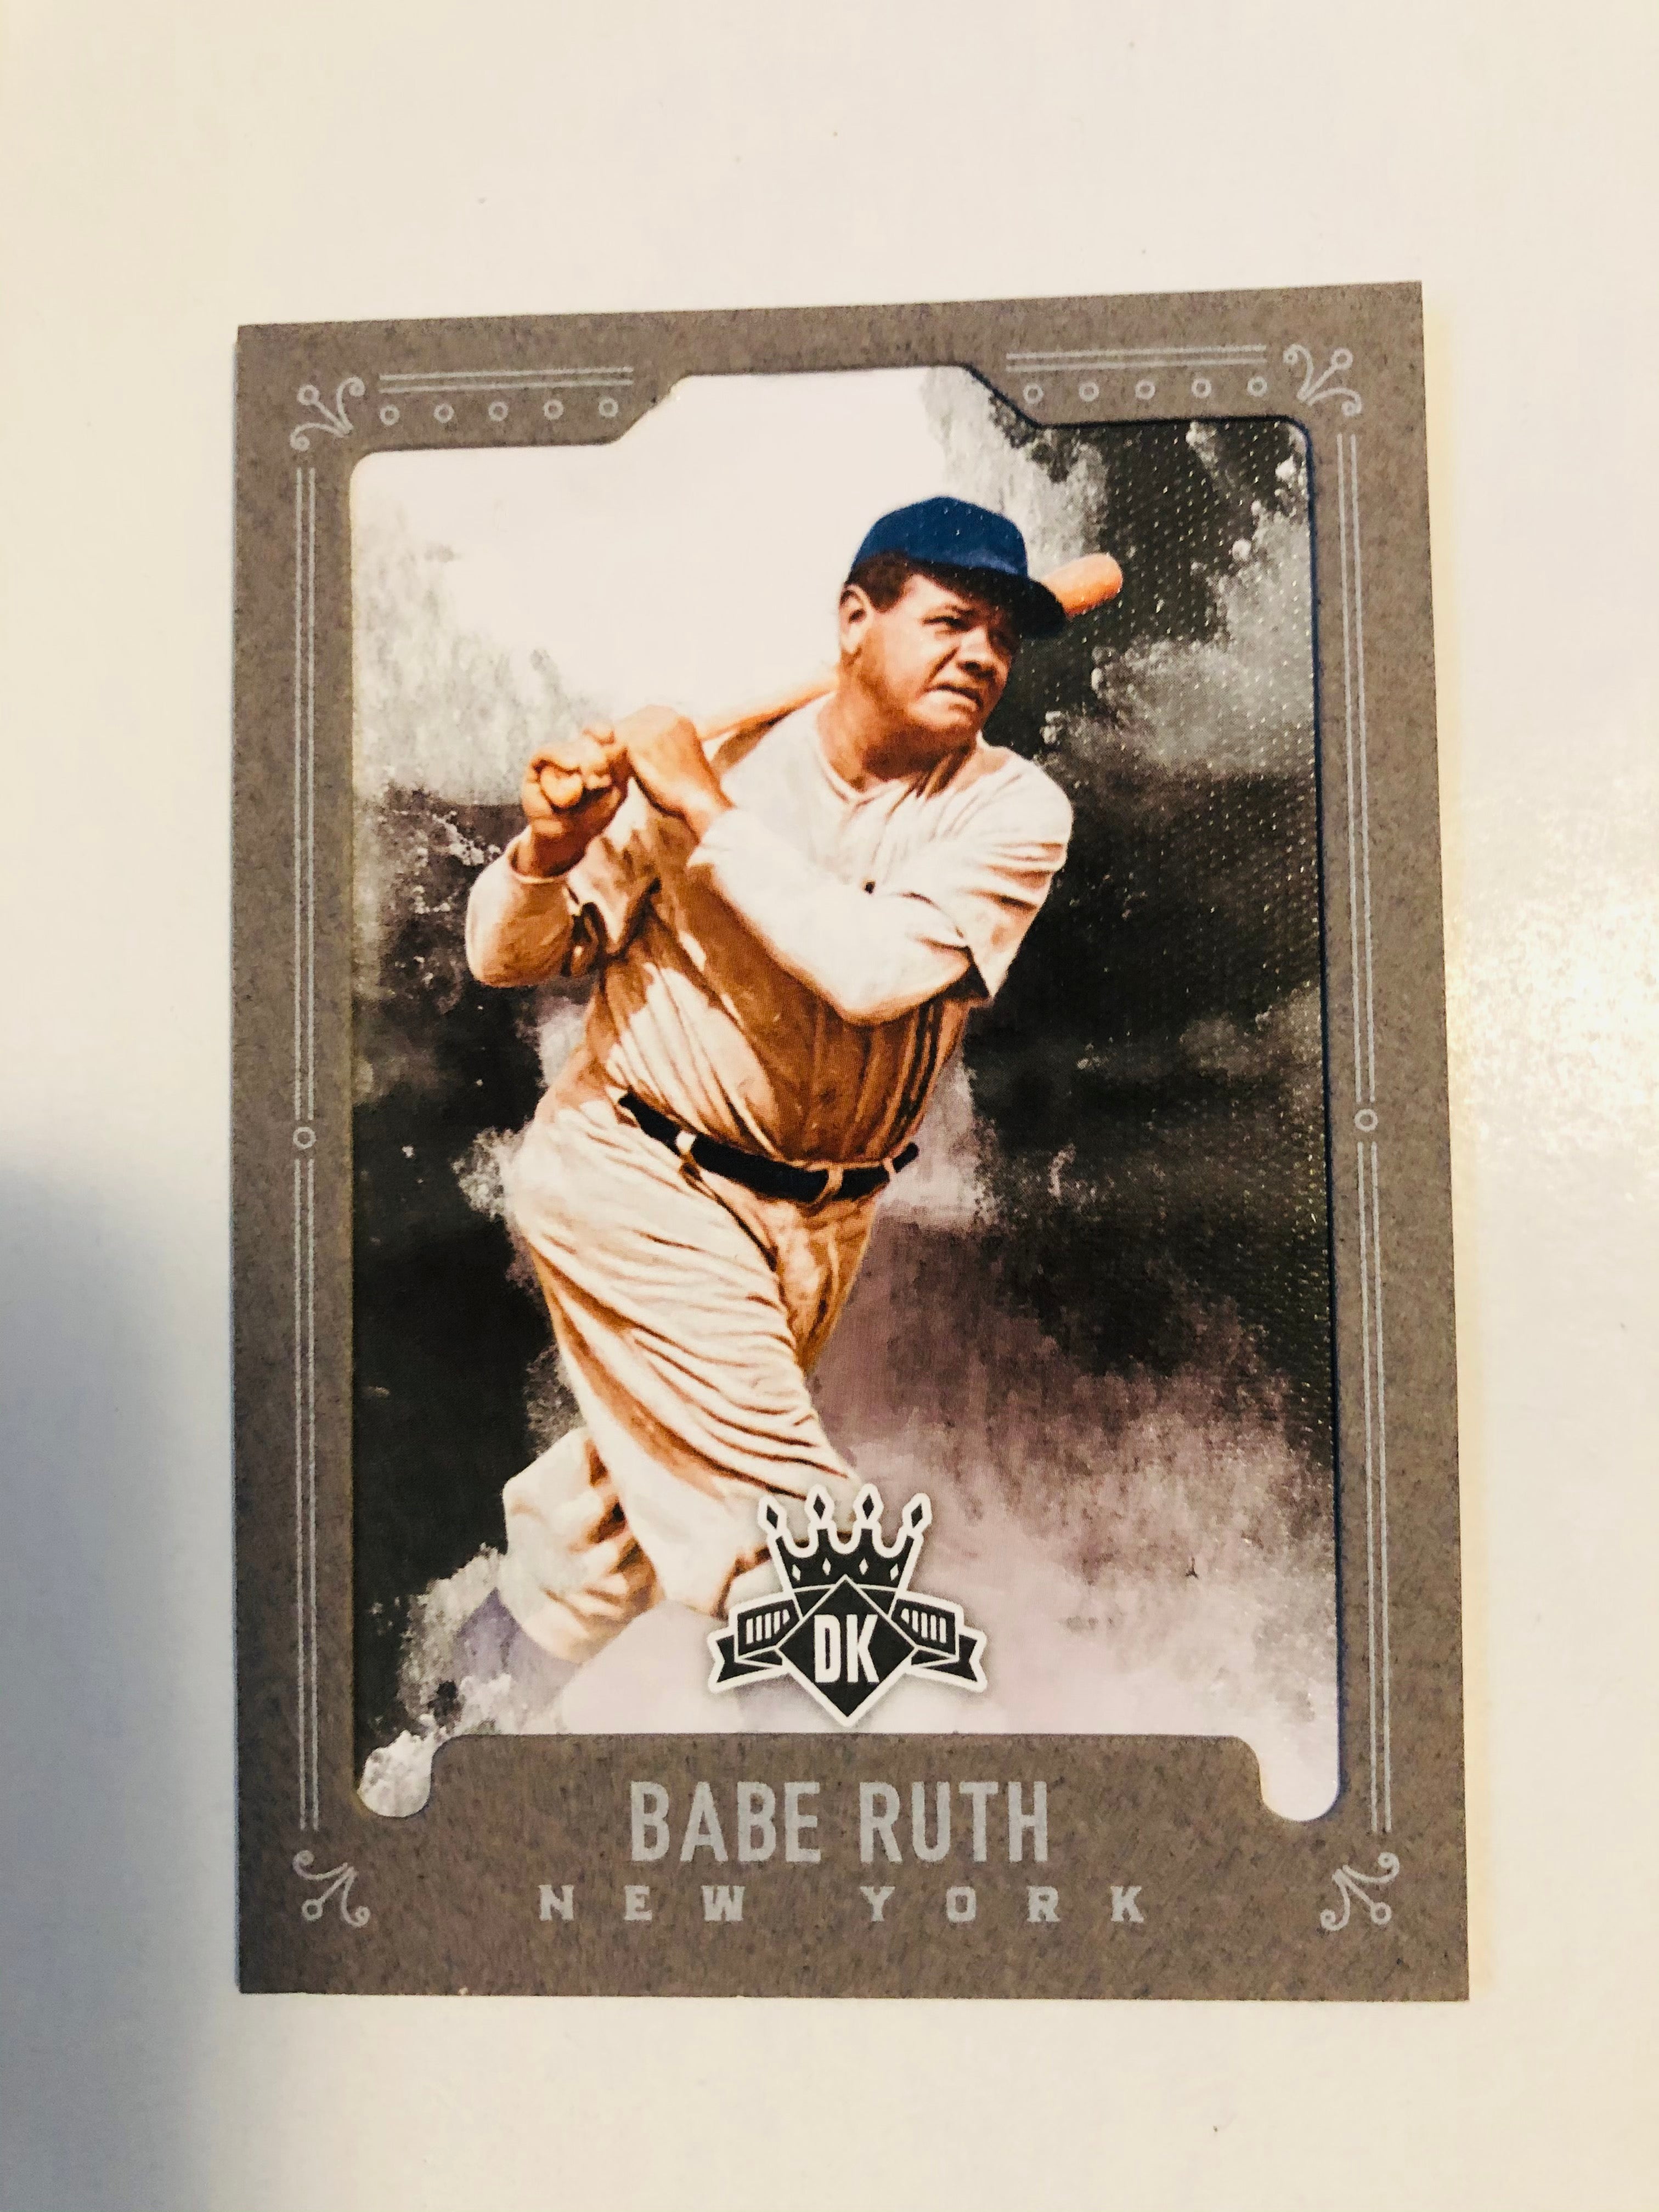 Babe Ruth panini Diamond kings baseball card 2017